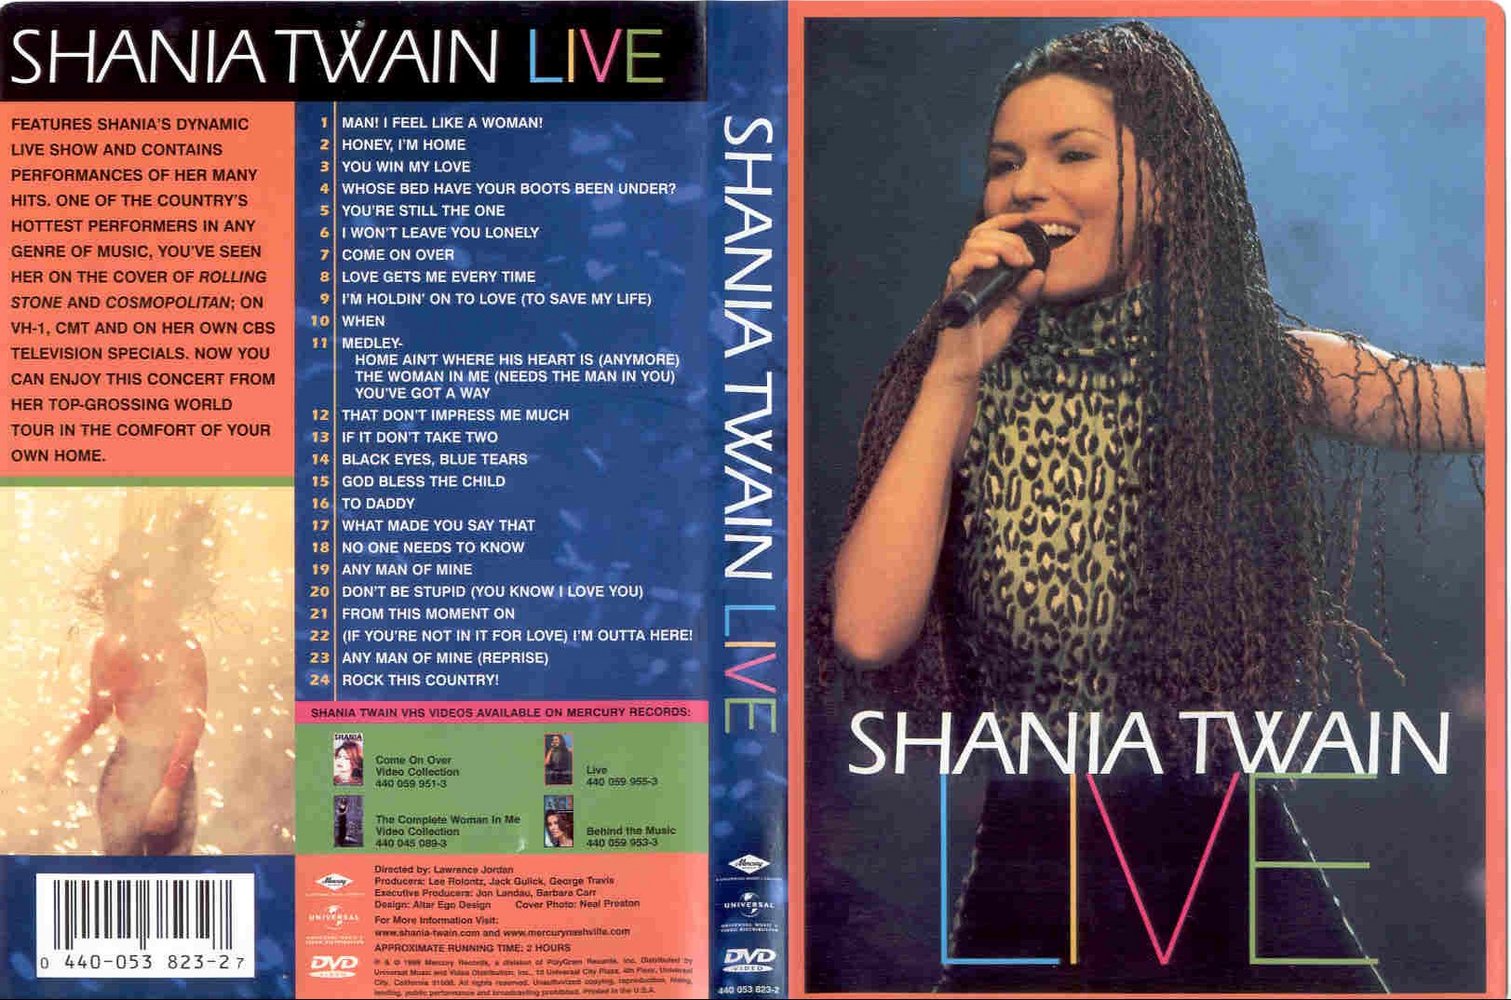 Jaquette DVD Shania Twain Live